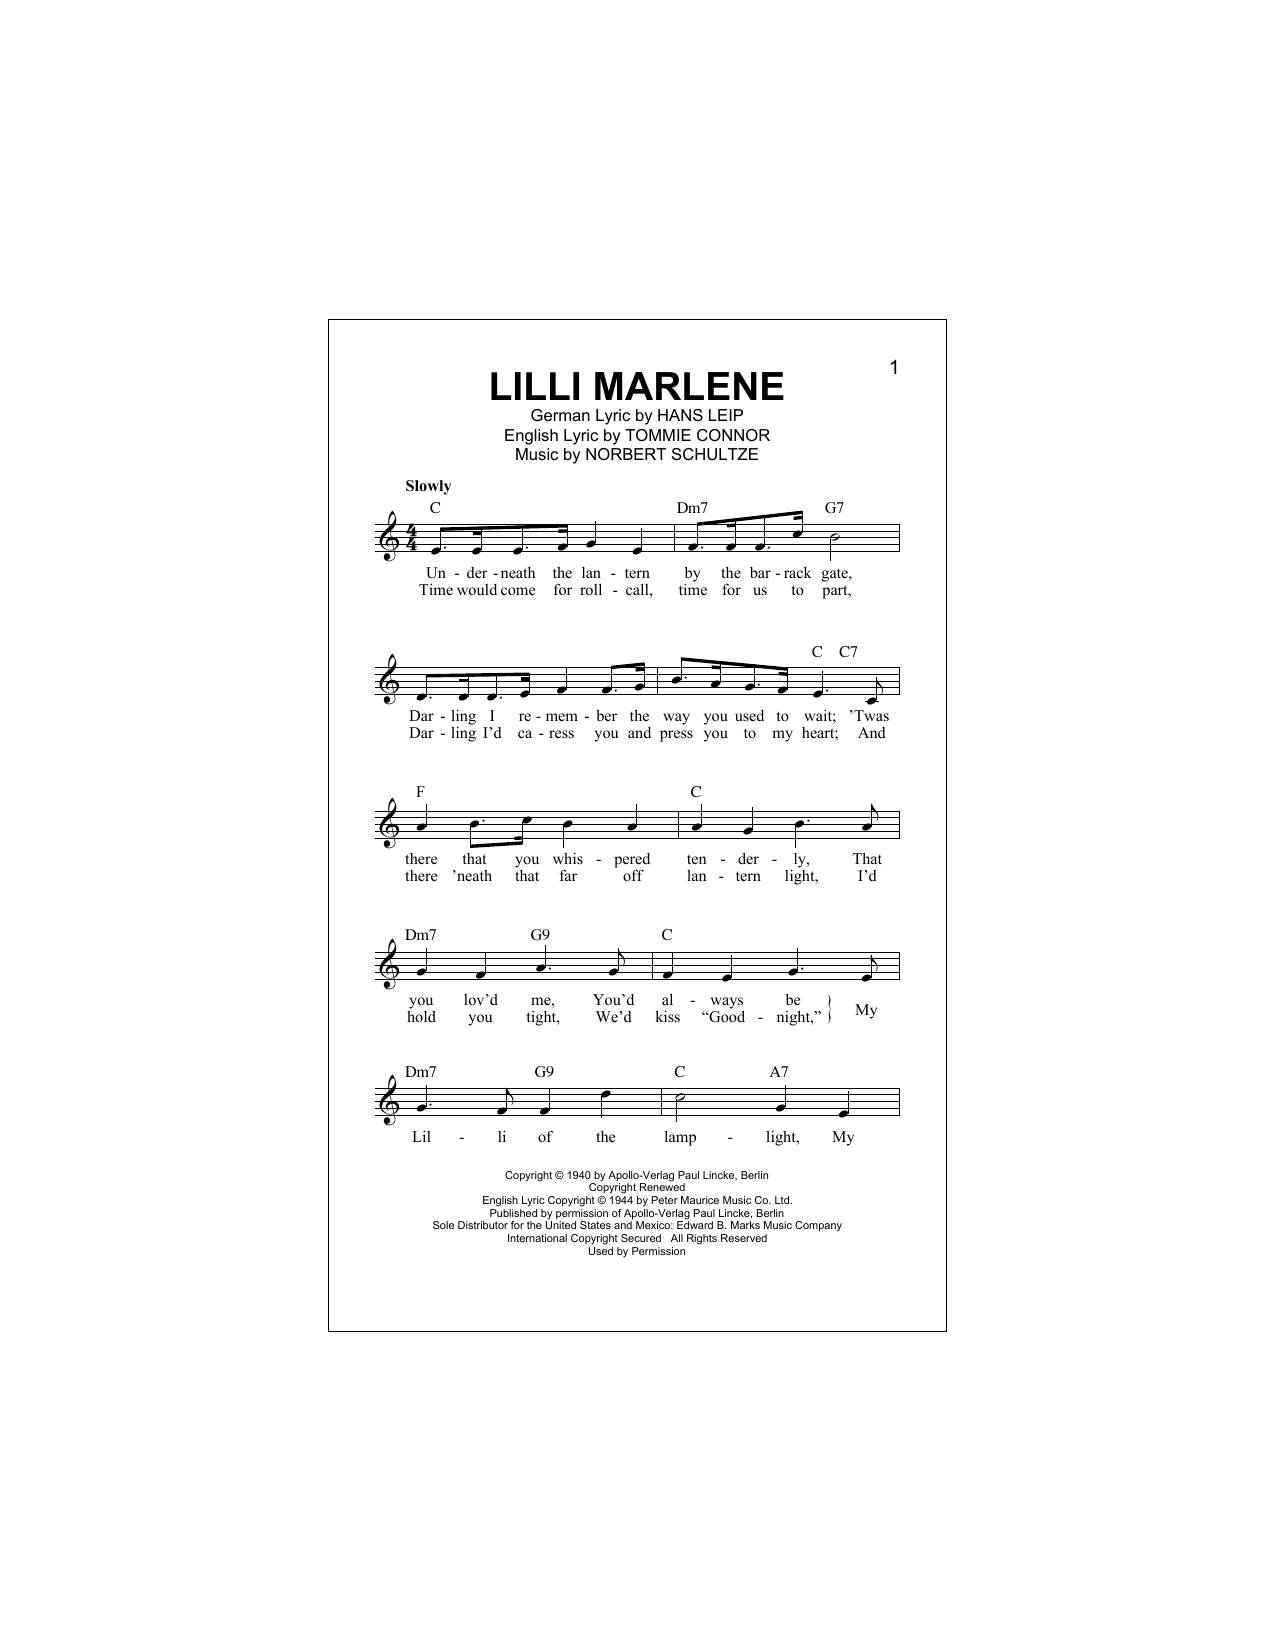 Marlene Dietrich Lilli Marlene (Lili Marleen) Sheet Music Notes & Chords for Lead Sheet / Fake Book - Download or Print PDF